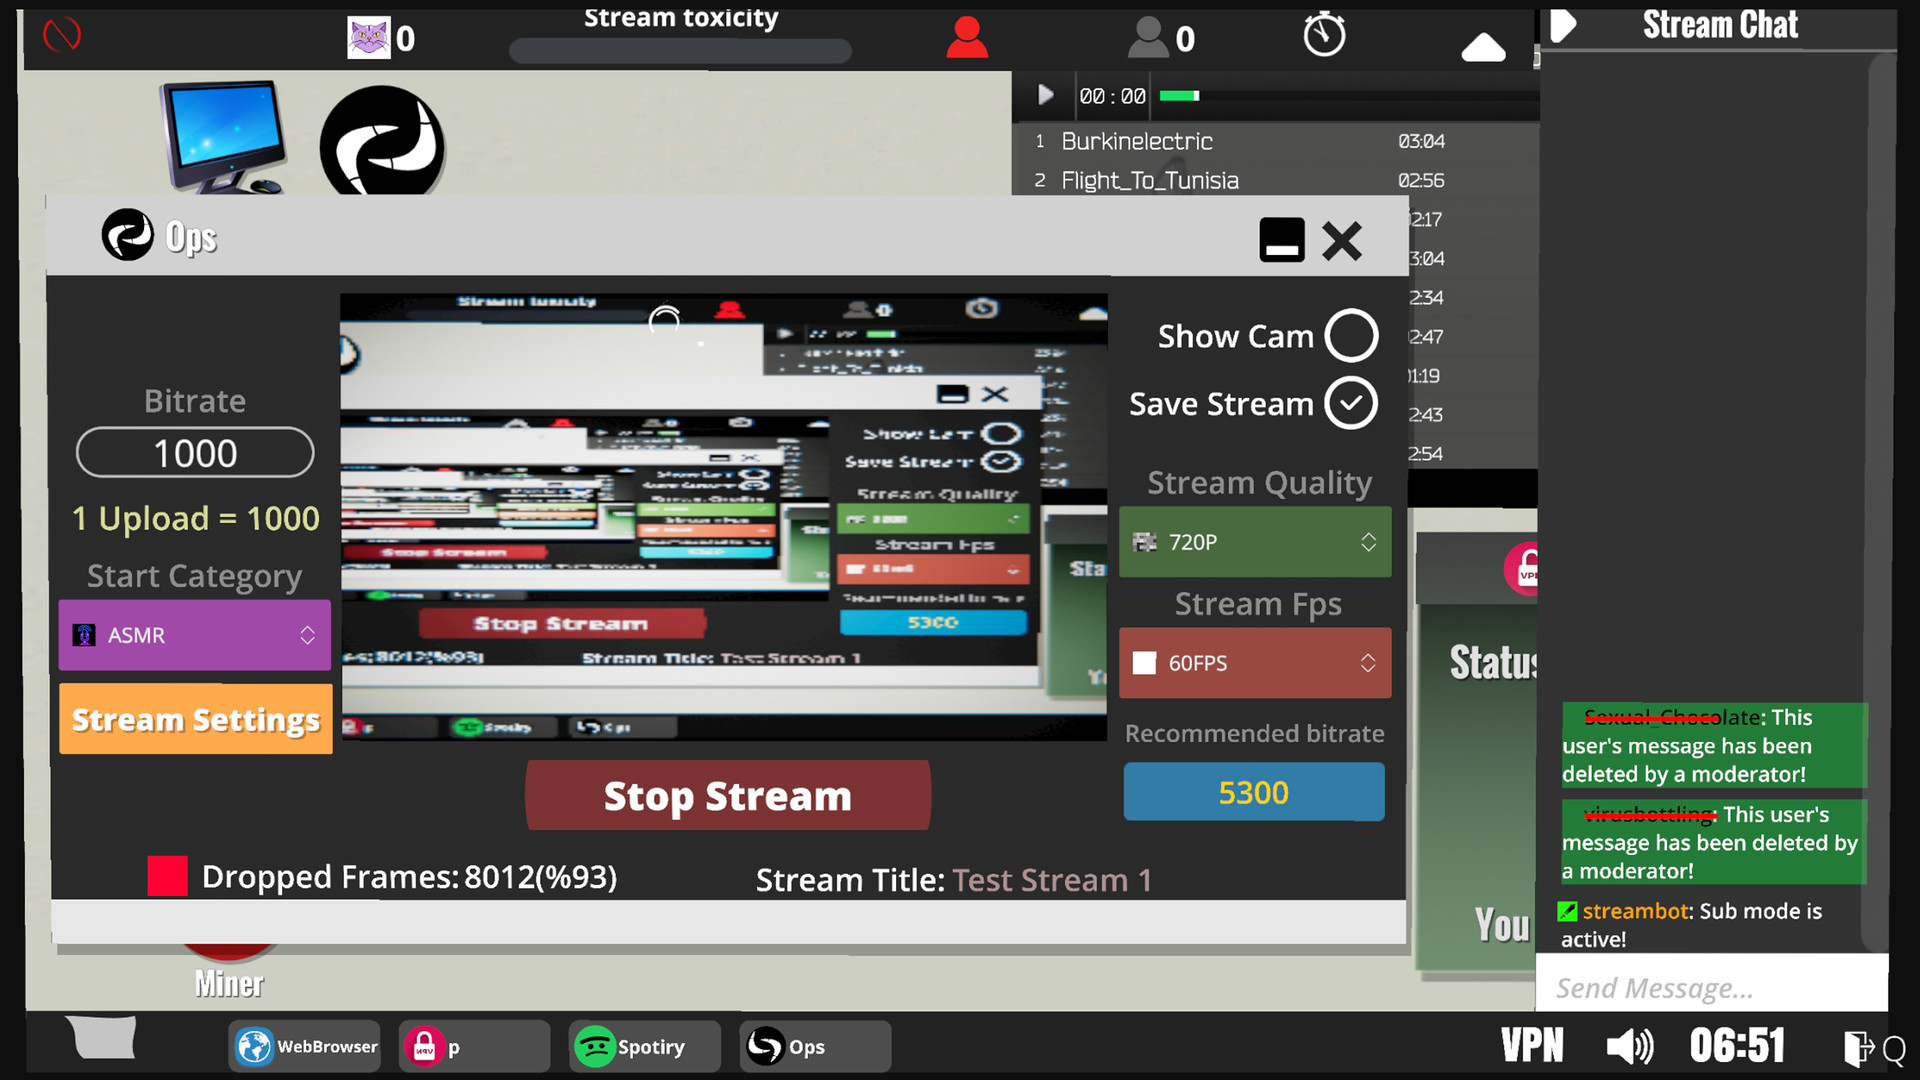 Save 20 On Streamer Life Simulator On Steam - como conseguir robux gratis sim hack